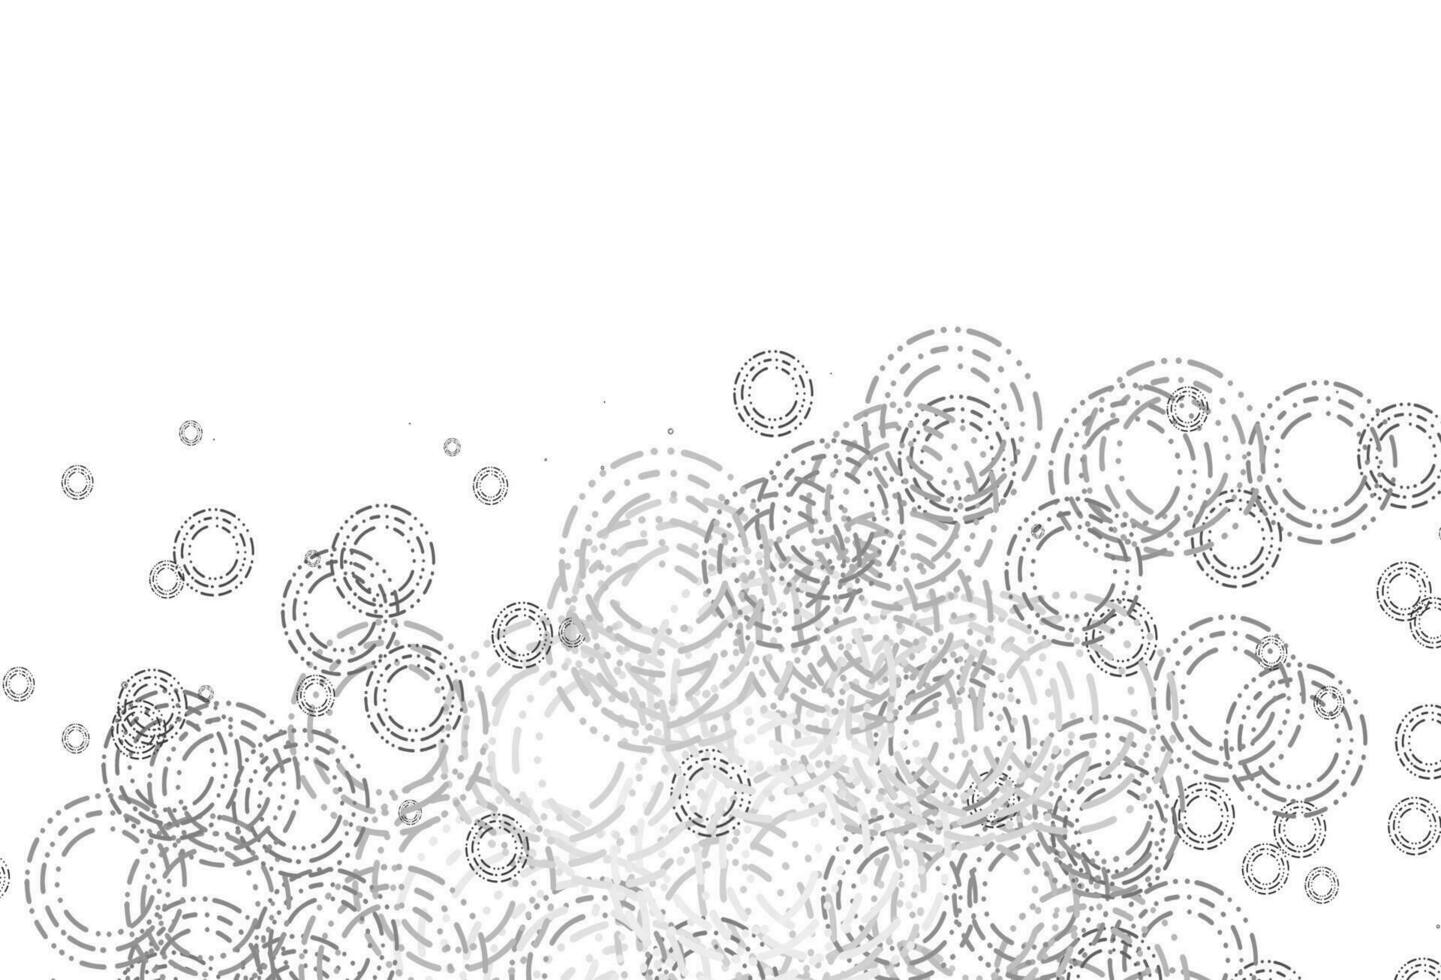 Fondo de vector gris plateado claro con burbujas.